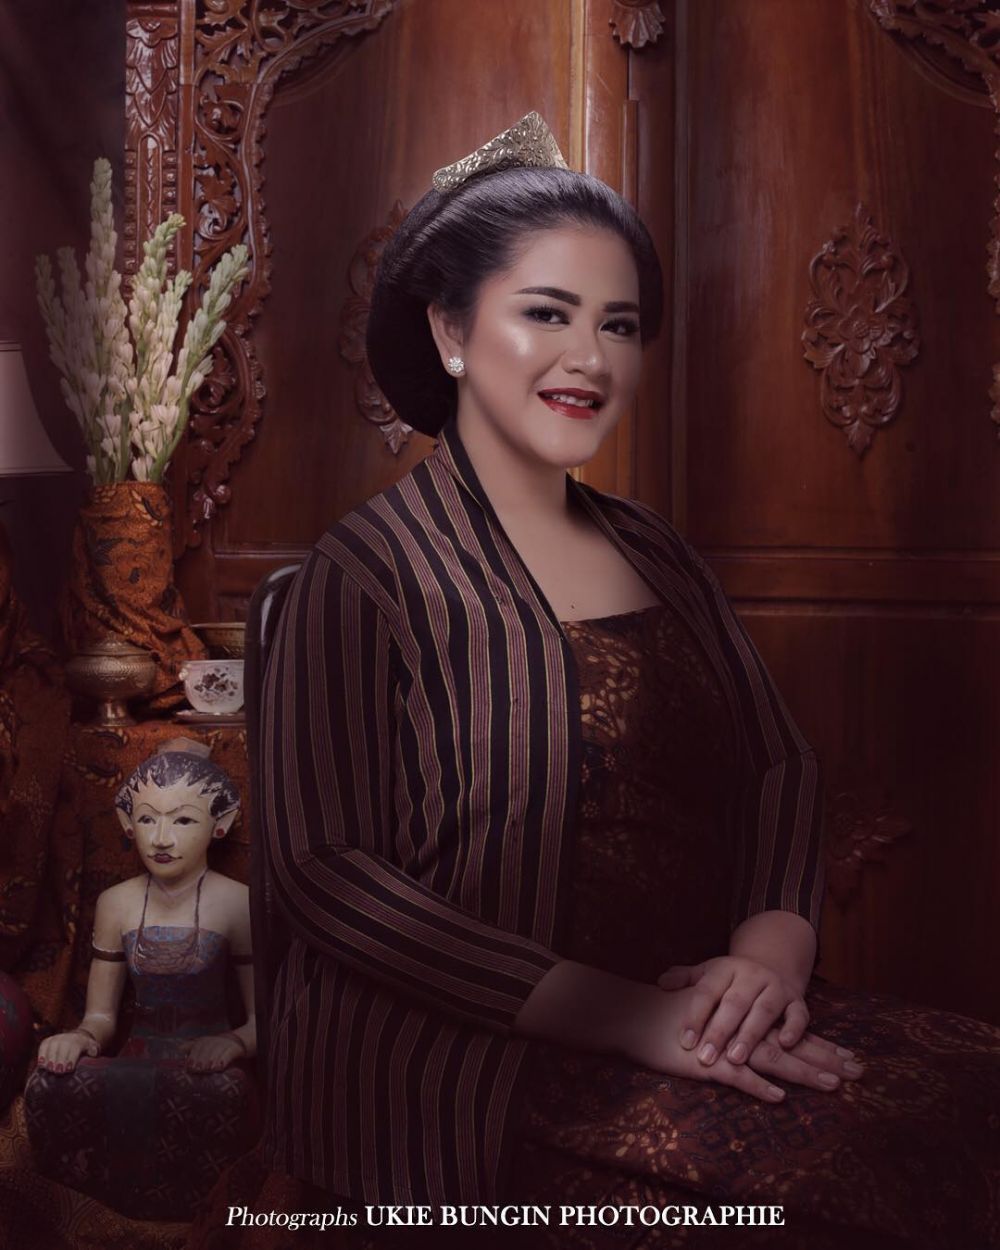 5 Pesona Kahiyang Ayu pemotretan pakai lurik, cantik khas Indonesia